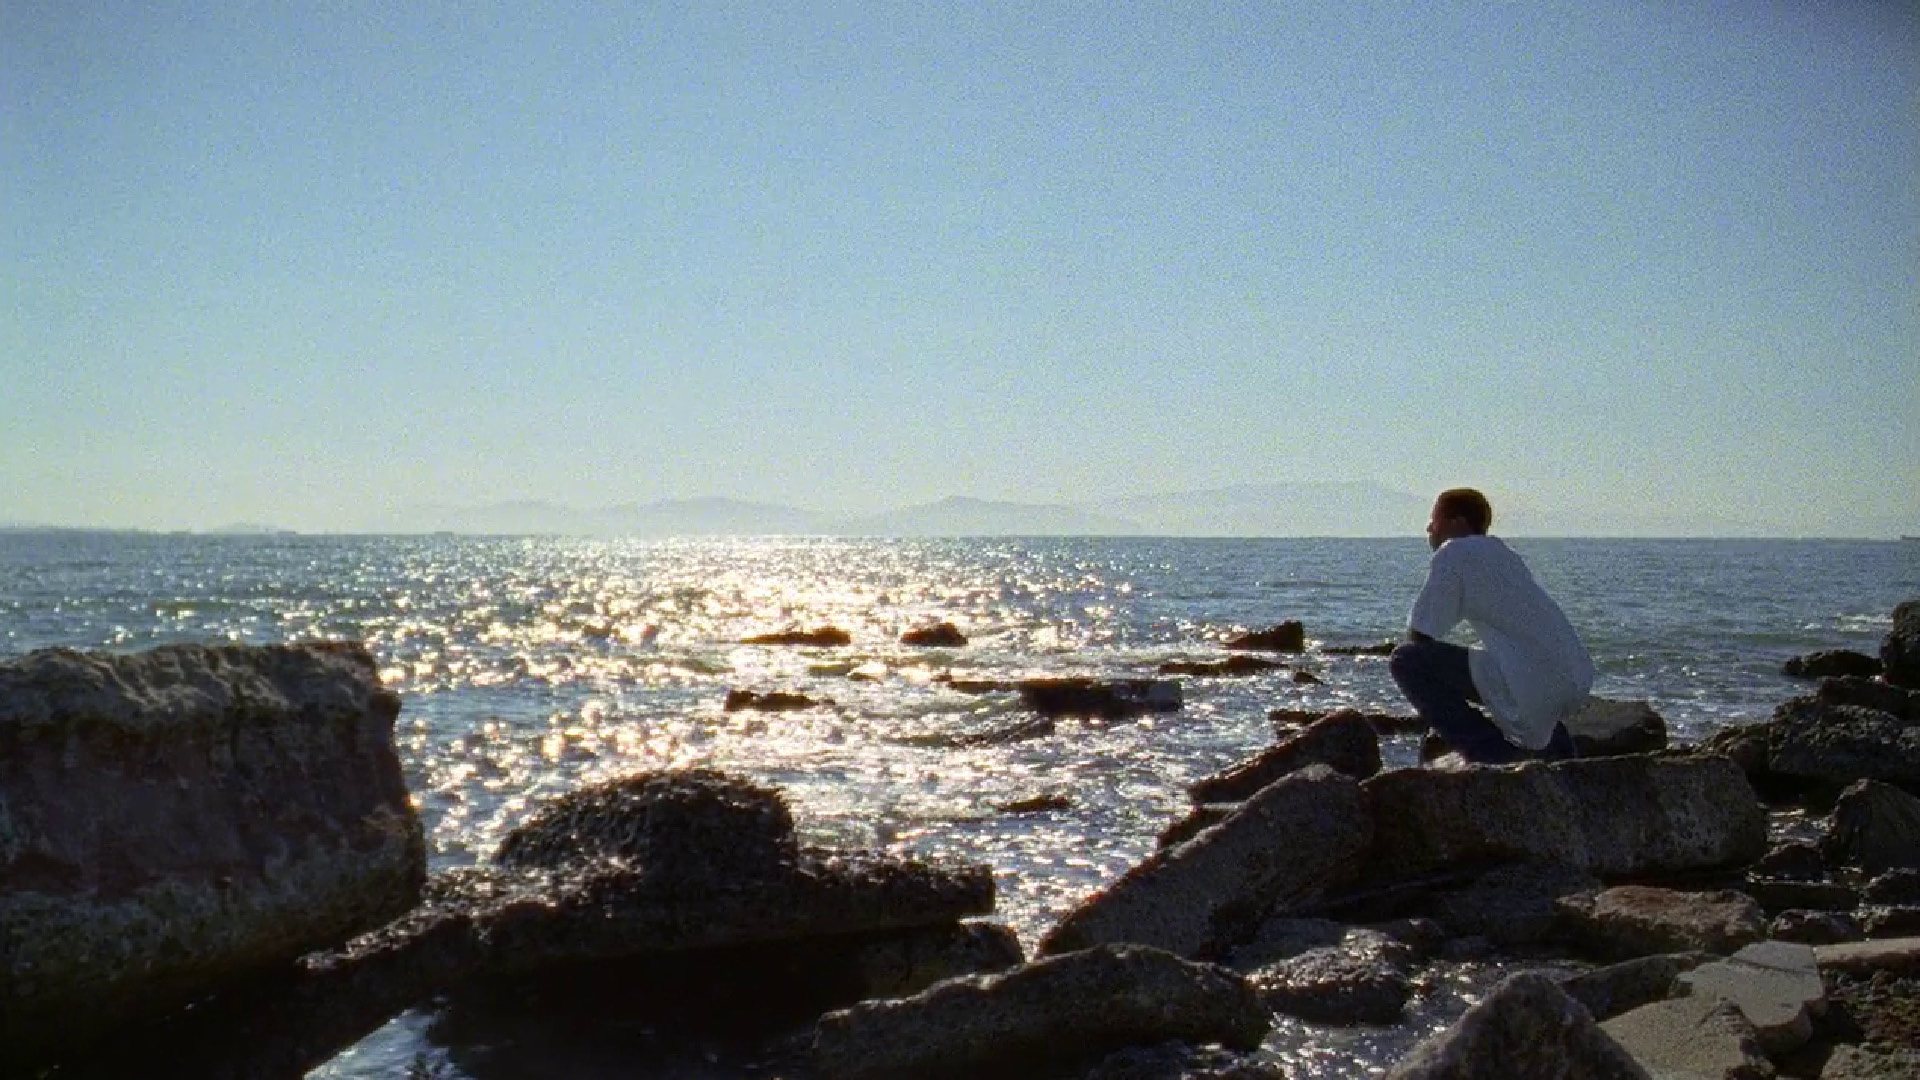 FRUITVALE STATION film still of Michael B. Jordan crouching on rocks near the ocean